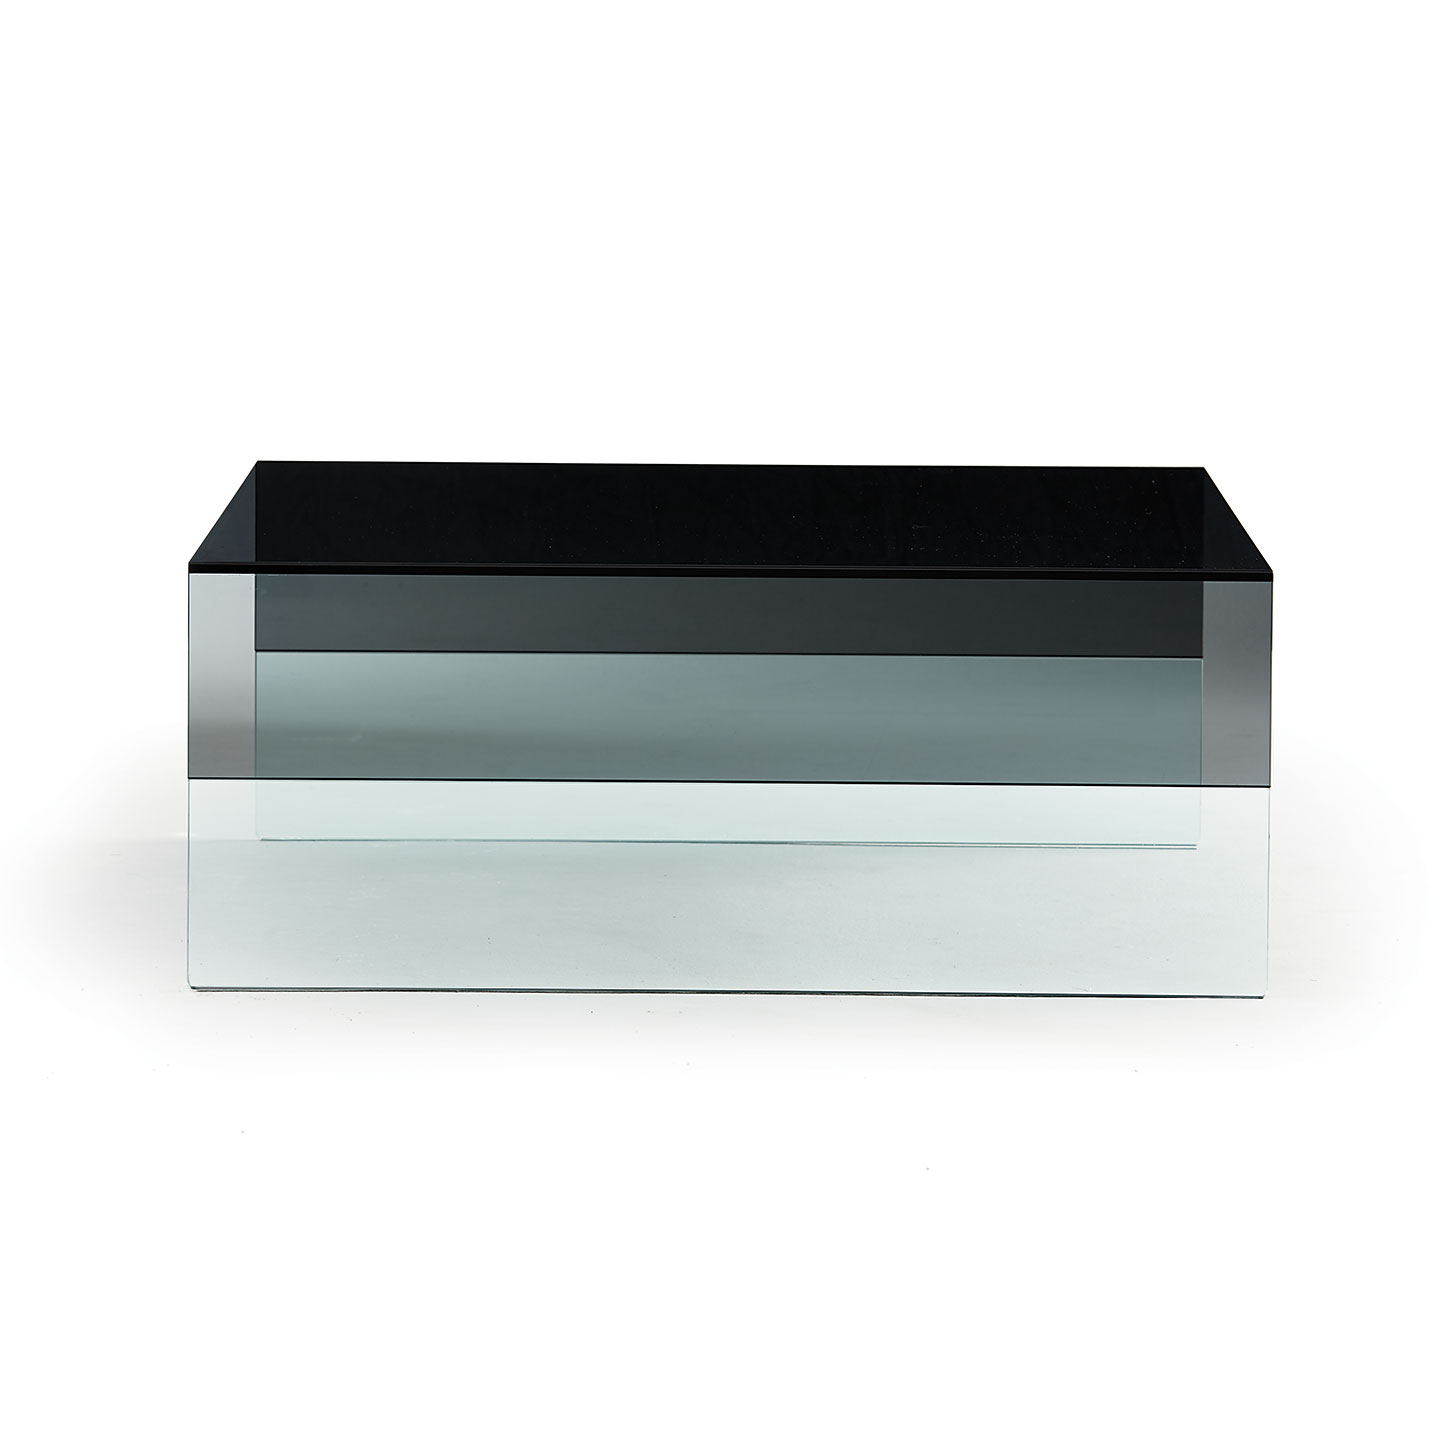 Haworth Smoke Table with rectangle shape and smoked glass